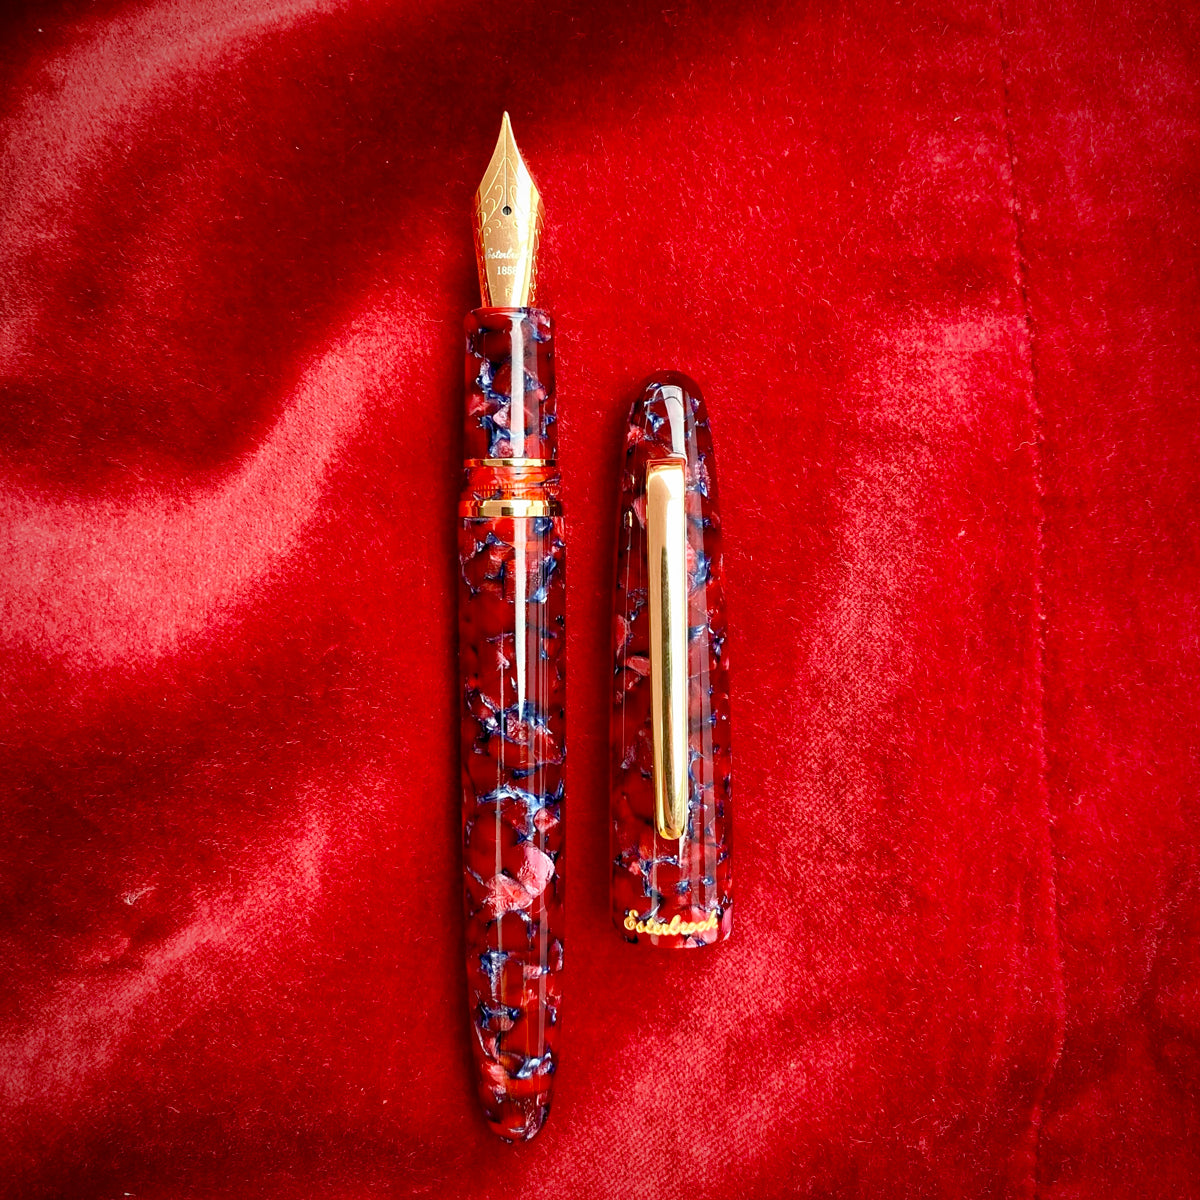 Estie Oversize Scarlet Palladium Trim Fountain Pen - Custom Techo Nib